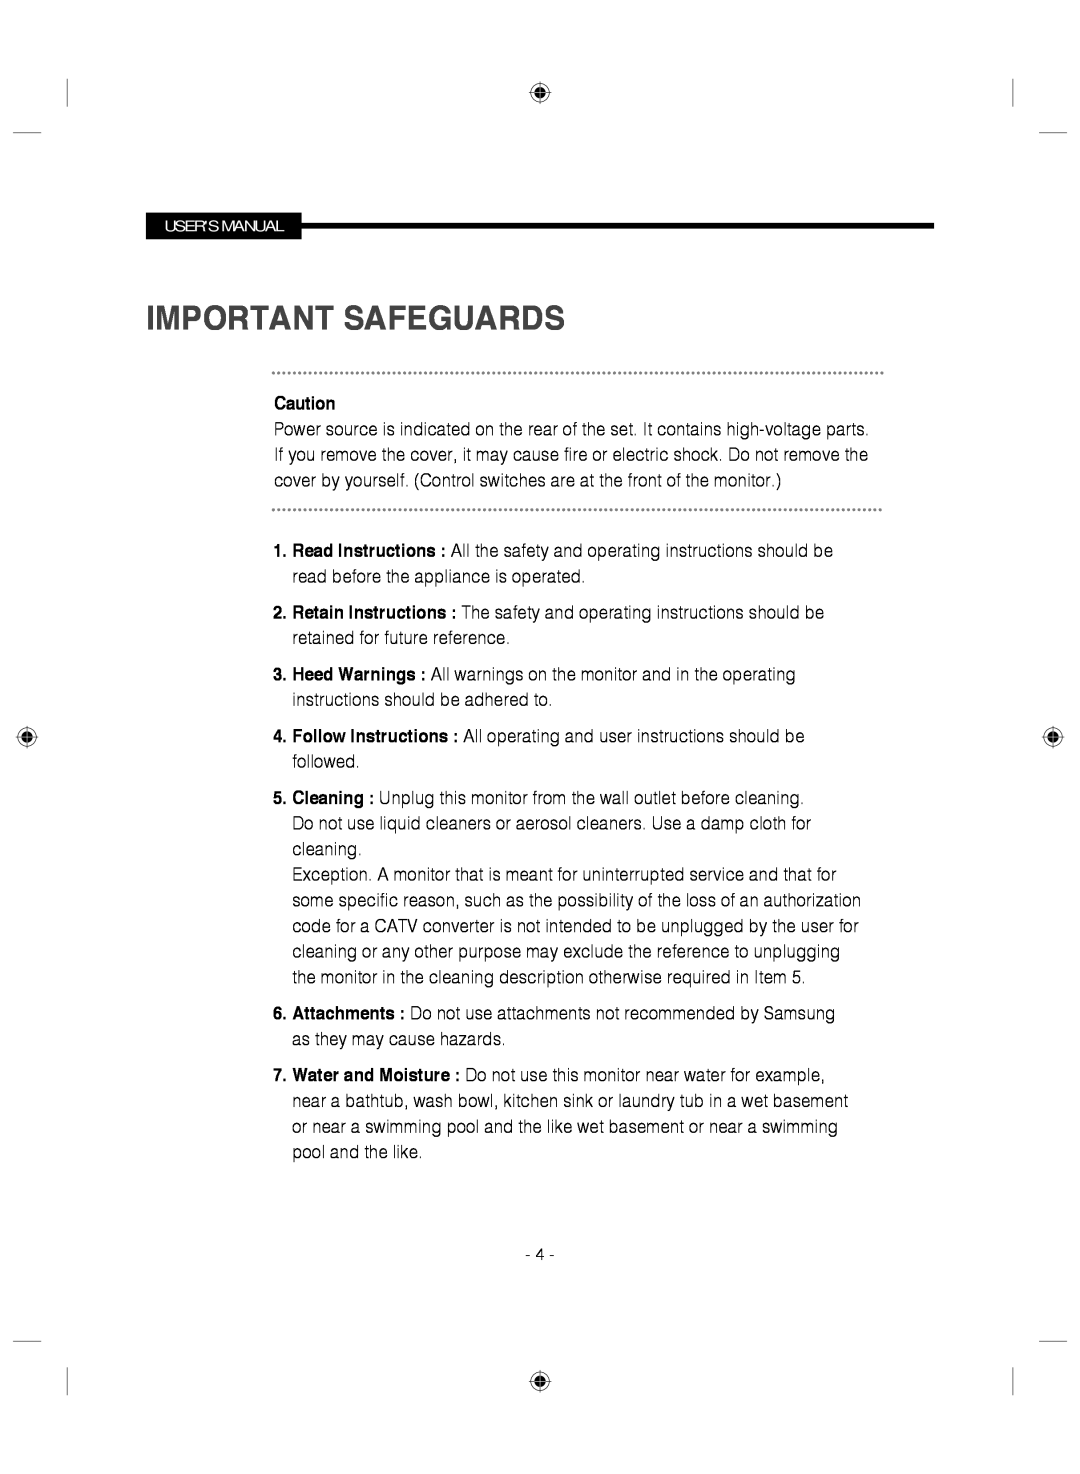 Samsung SMC-145 manual Important Safeguards 